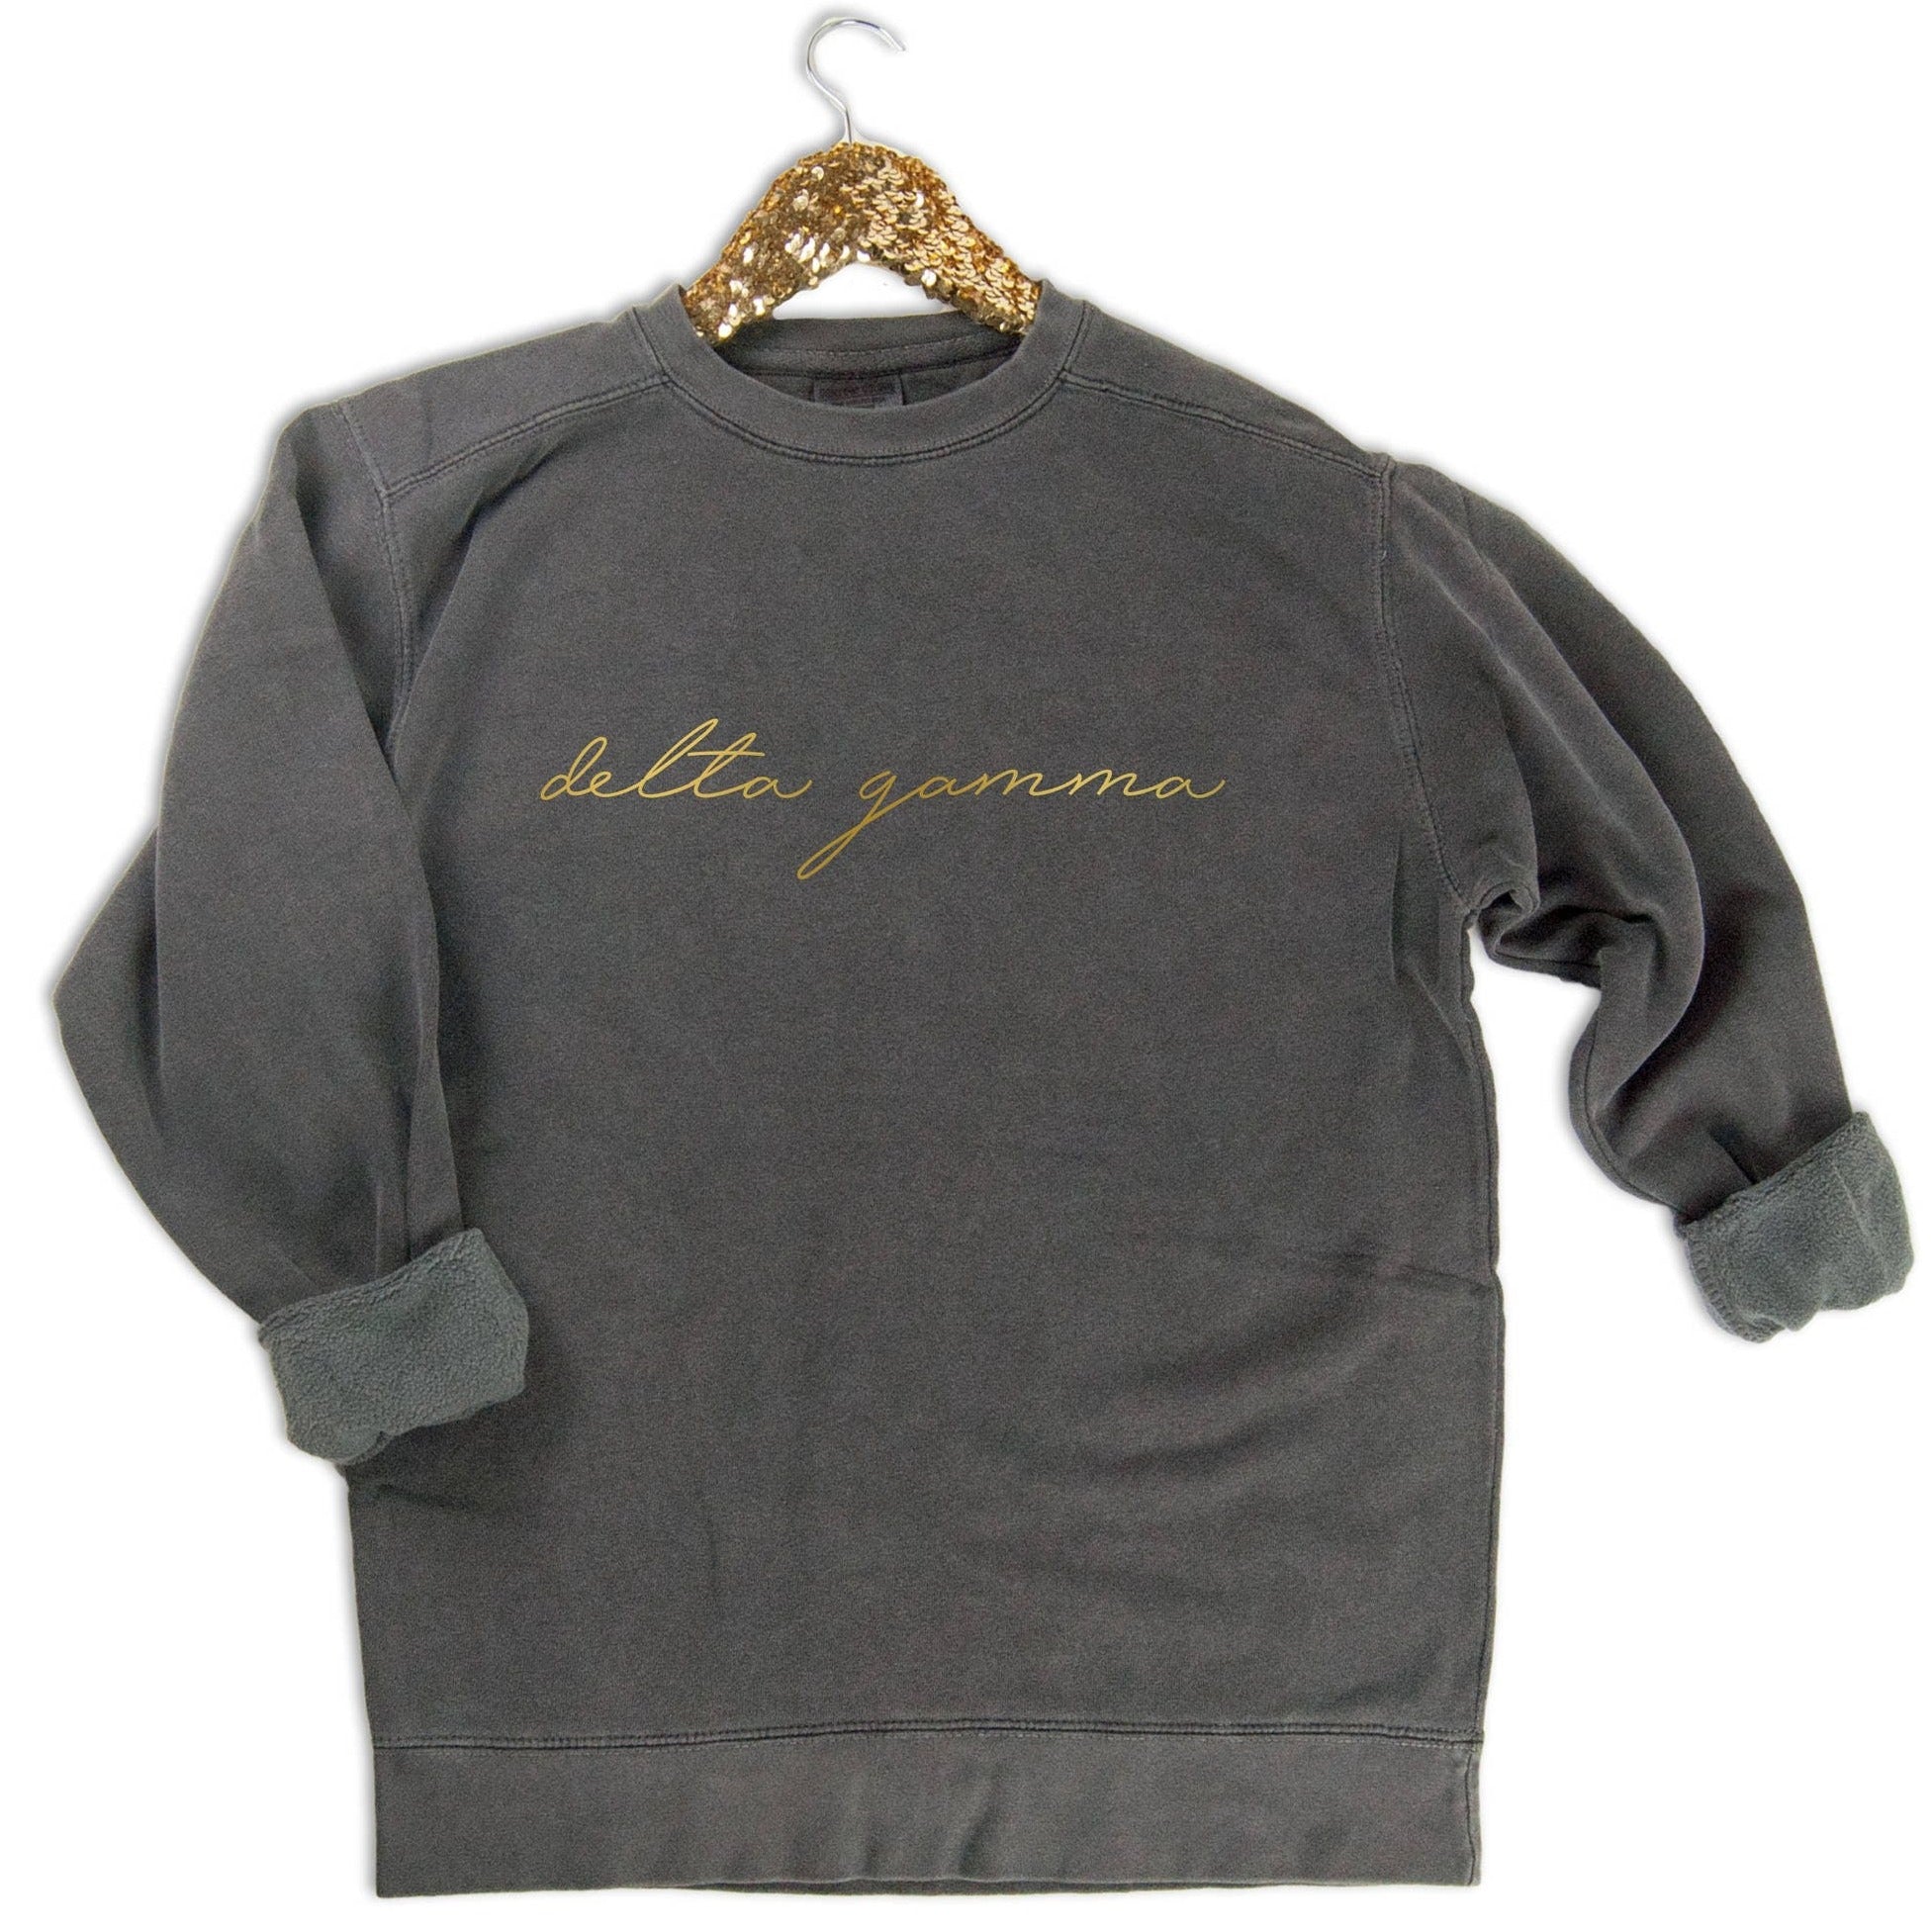 Delta Gamma Gold Script Letters Sweatshirt - Go Greek Chic